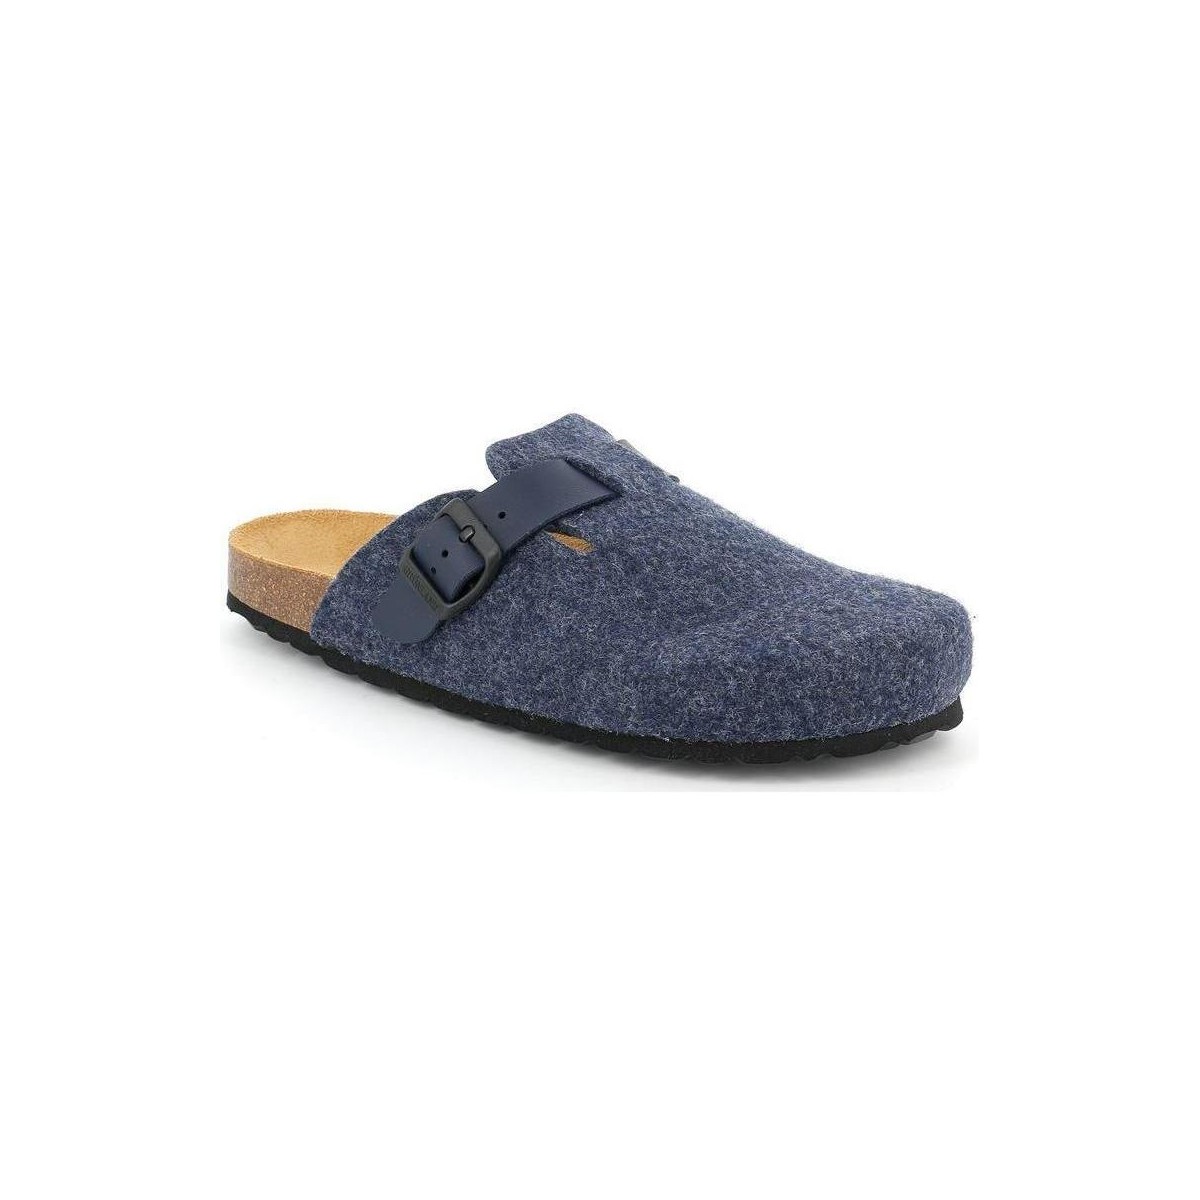 Schoenen Heren Leren slippers Grunland DSG-CB0185 Blauw